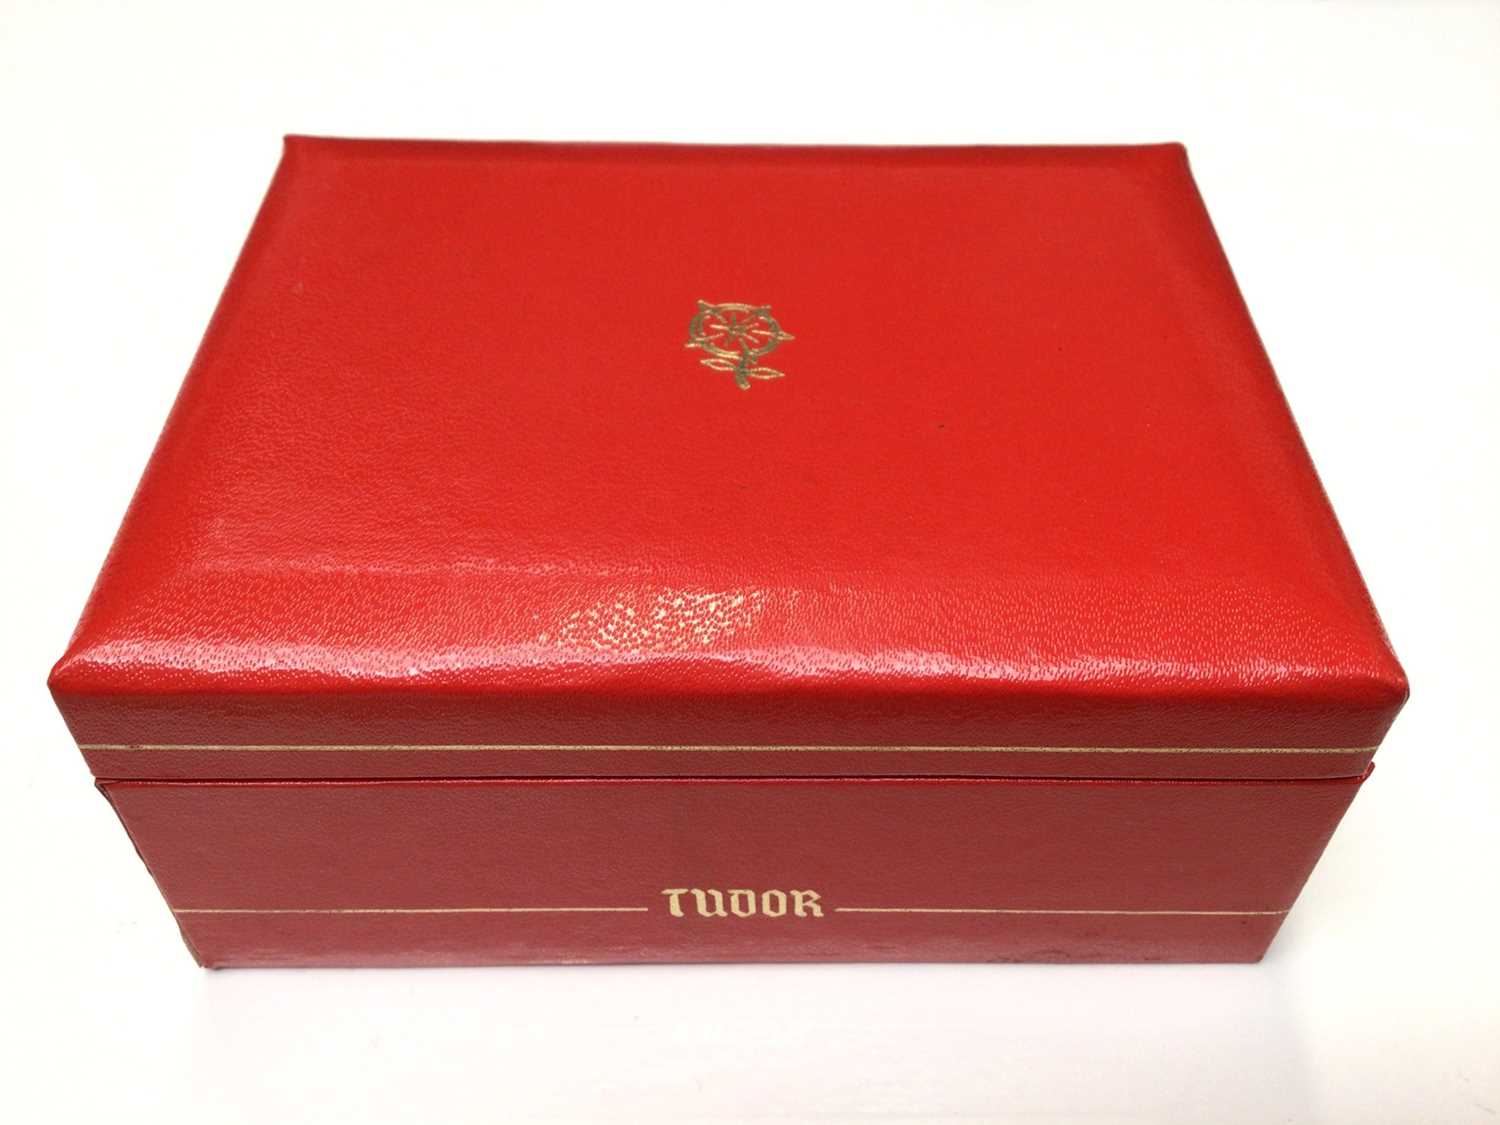 Lot 65 - Vintage Tudor empty watch box